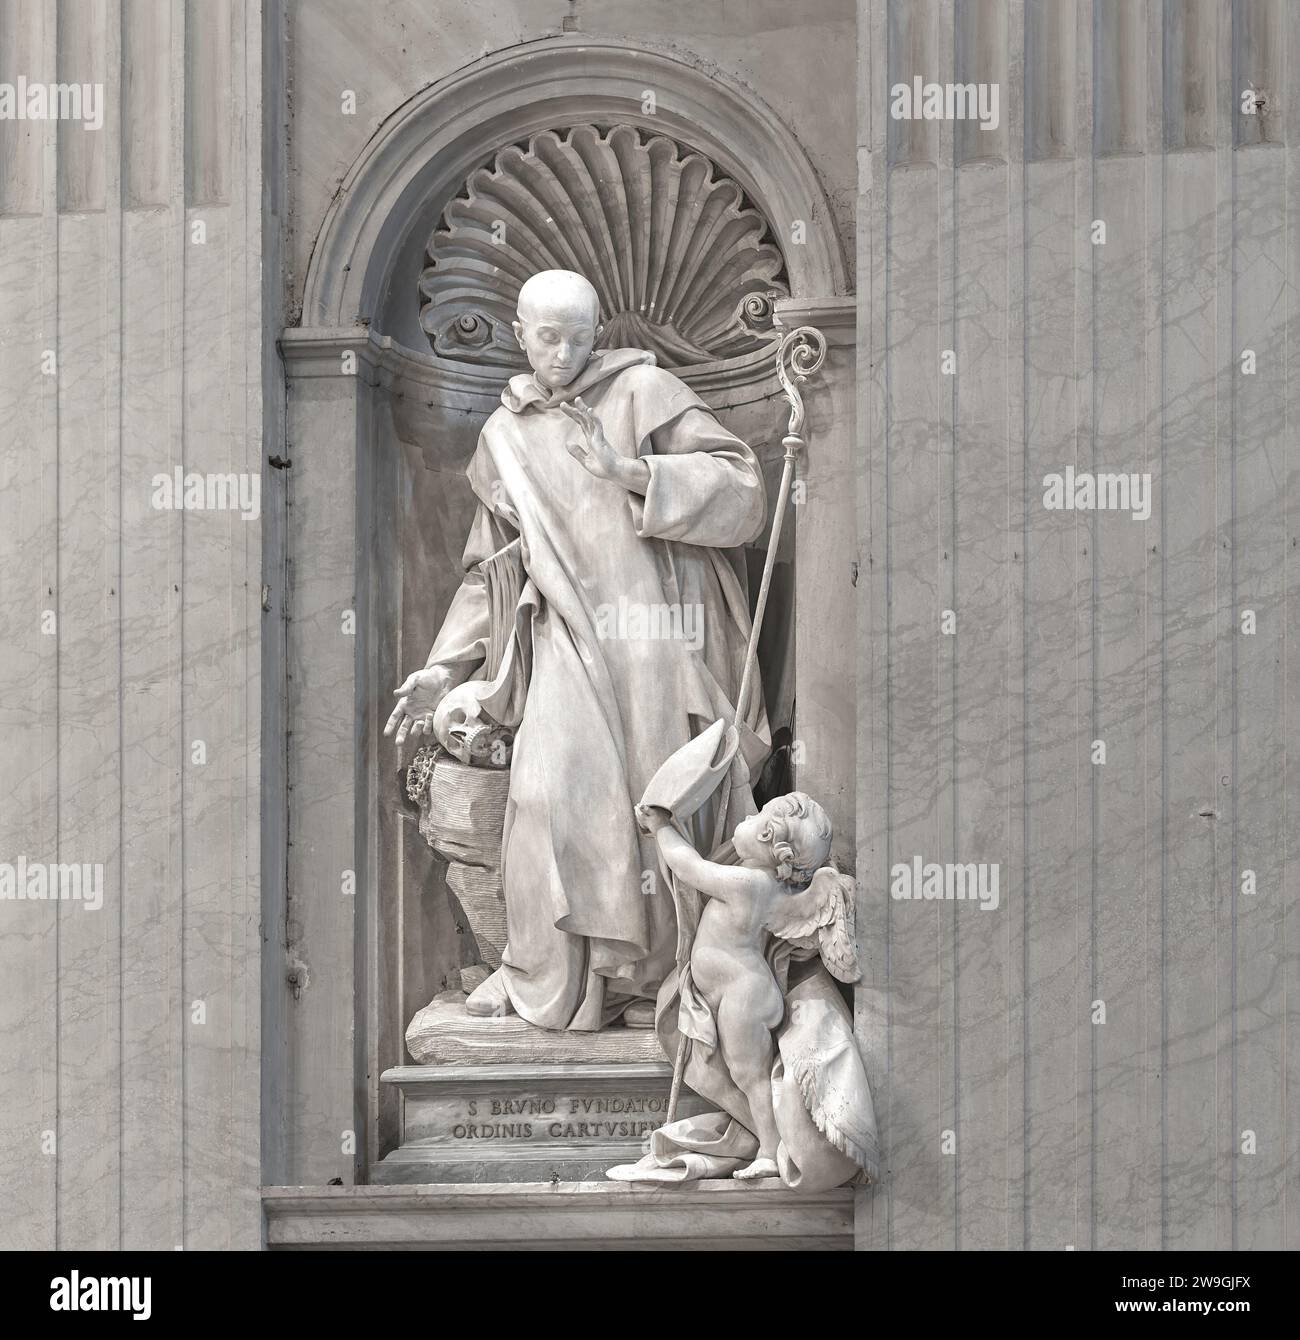 Statue des hl. Bruno im Petersdom, Vatikan, Rom, Italien. Stockfoto